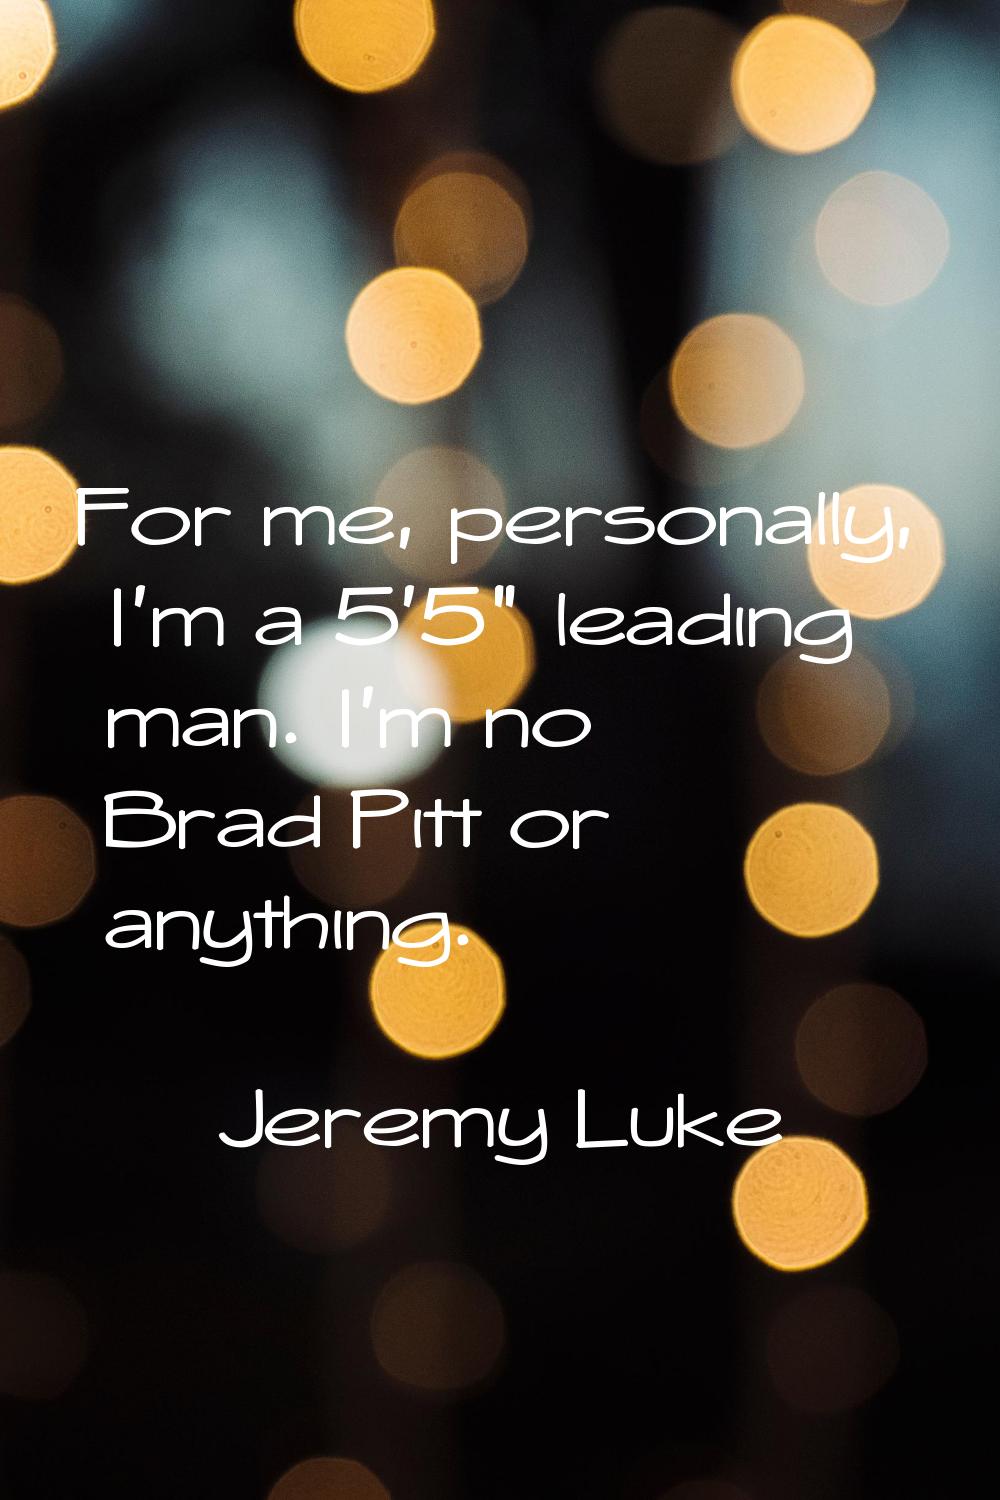 For me, personally, I'm a 5'5" leading man. I'm no Brad Pitt or anything.